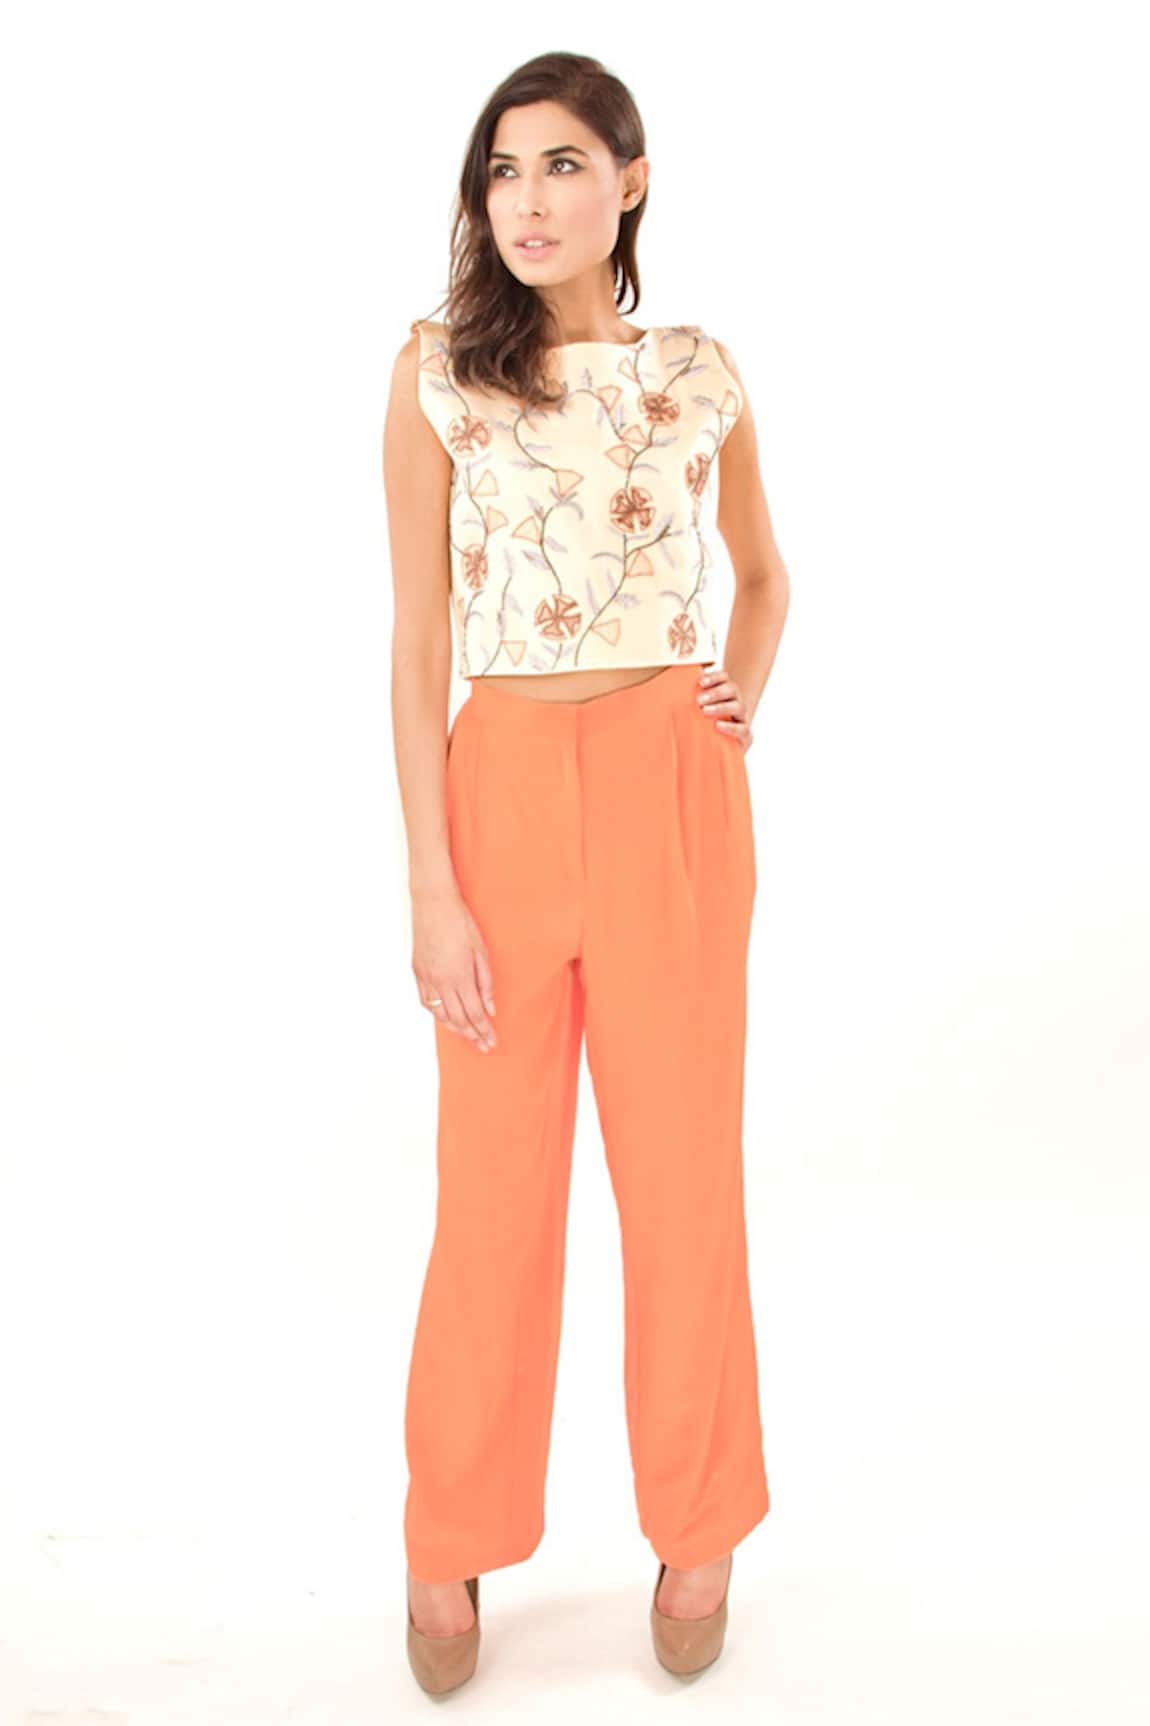 Jasmine Bains Embroidered Crop Top & Trouser Set